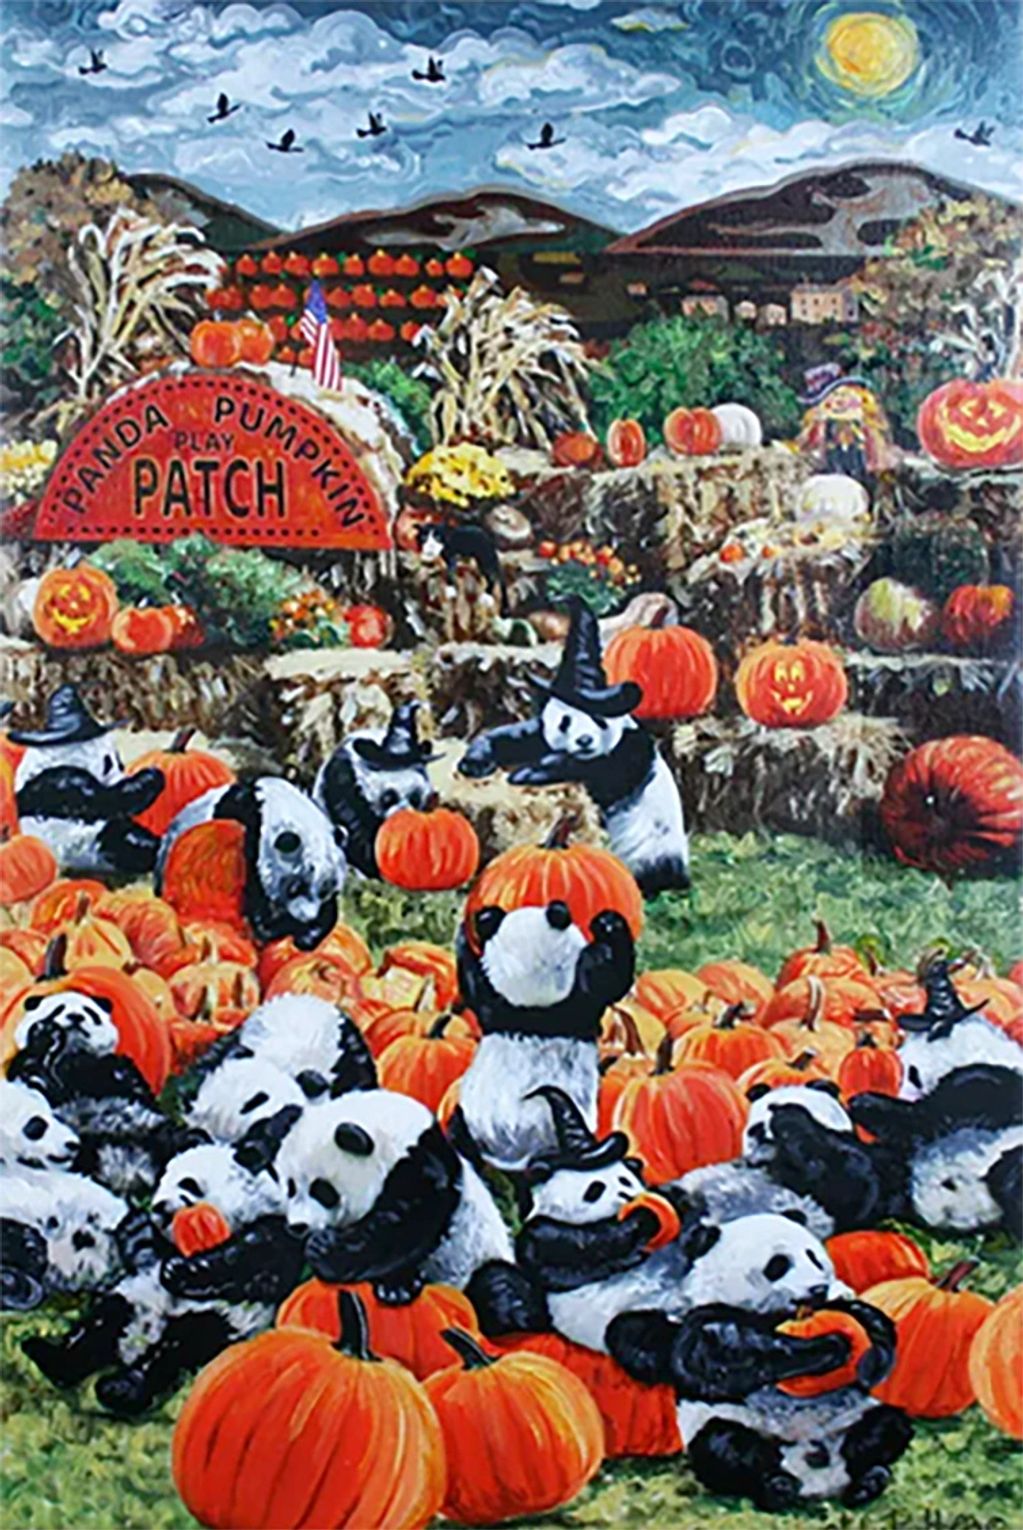 Pandas, and pumpkins harvest time having great fun.